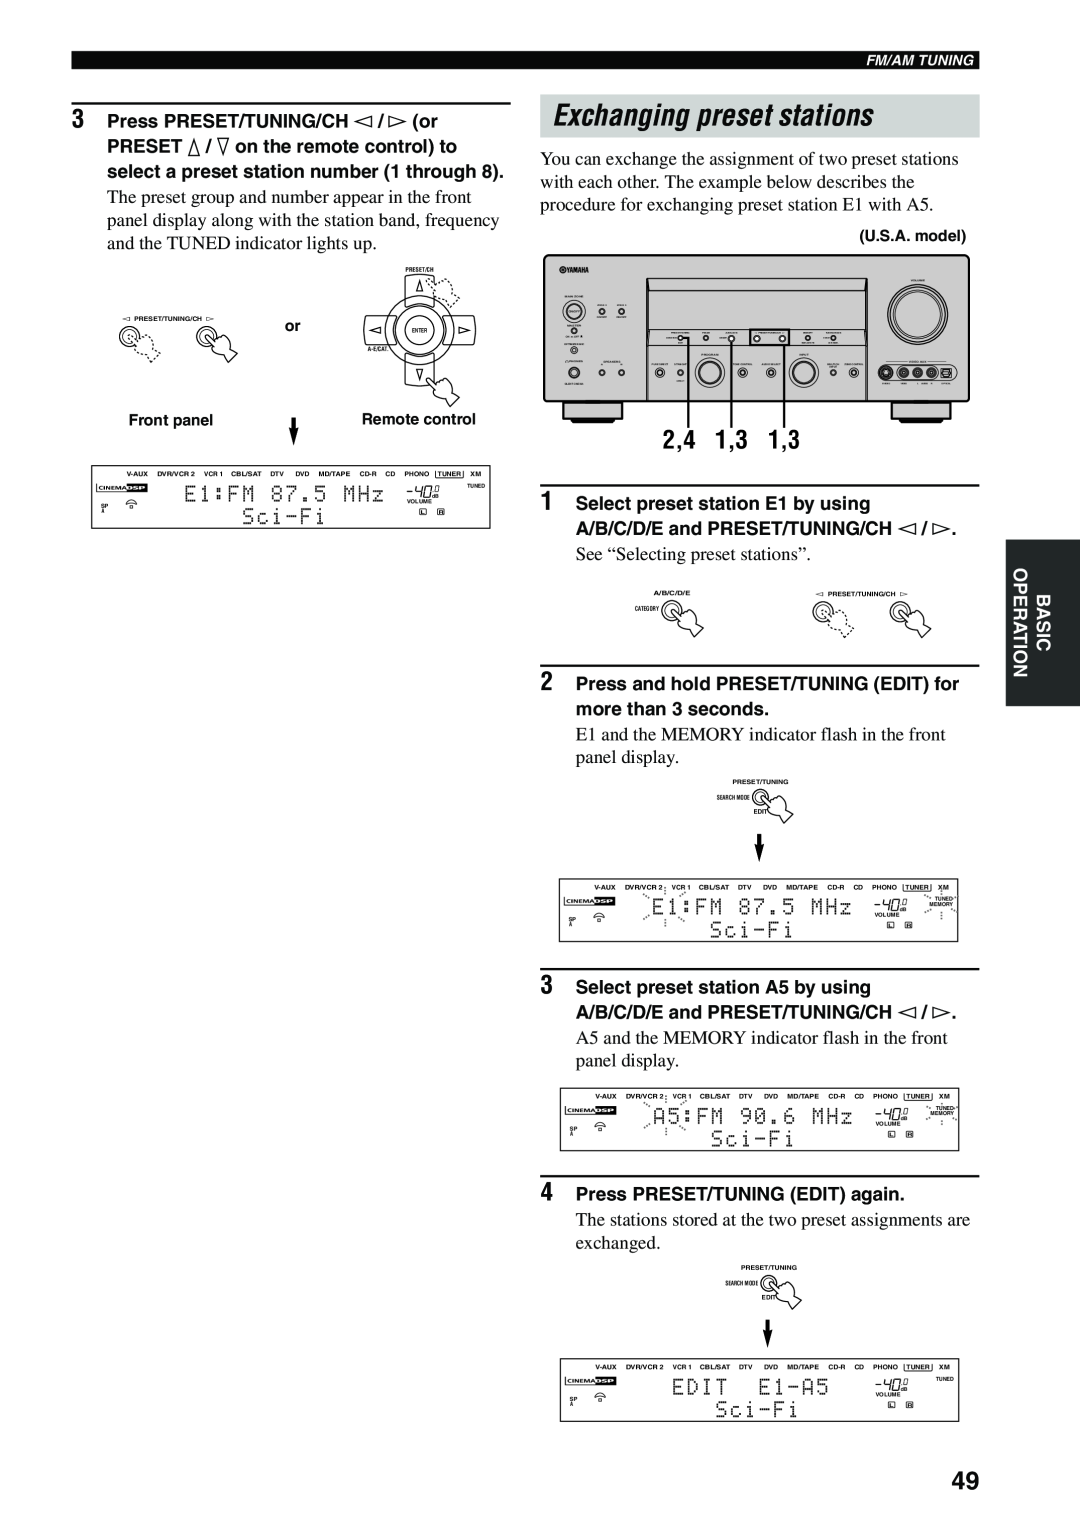 Yamaha HTR-5990 owner manual Exchanging preset stations, 2,4 1,3 1,3, E1:FM, A5:FM, Edit, E1-A5, Sci-Fi 